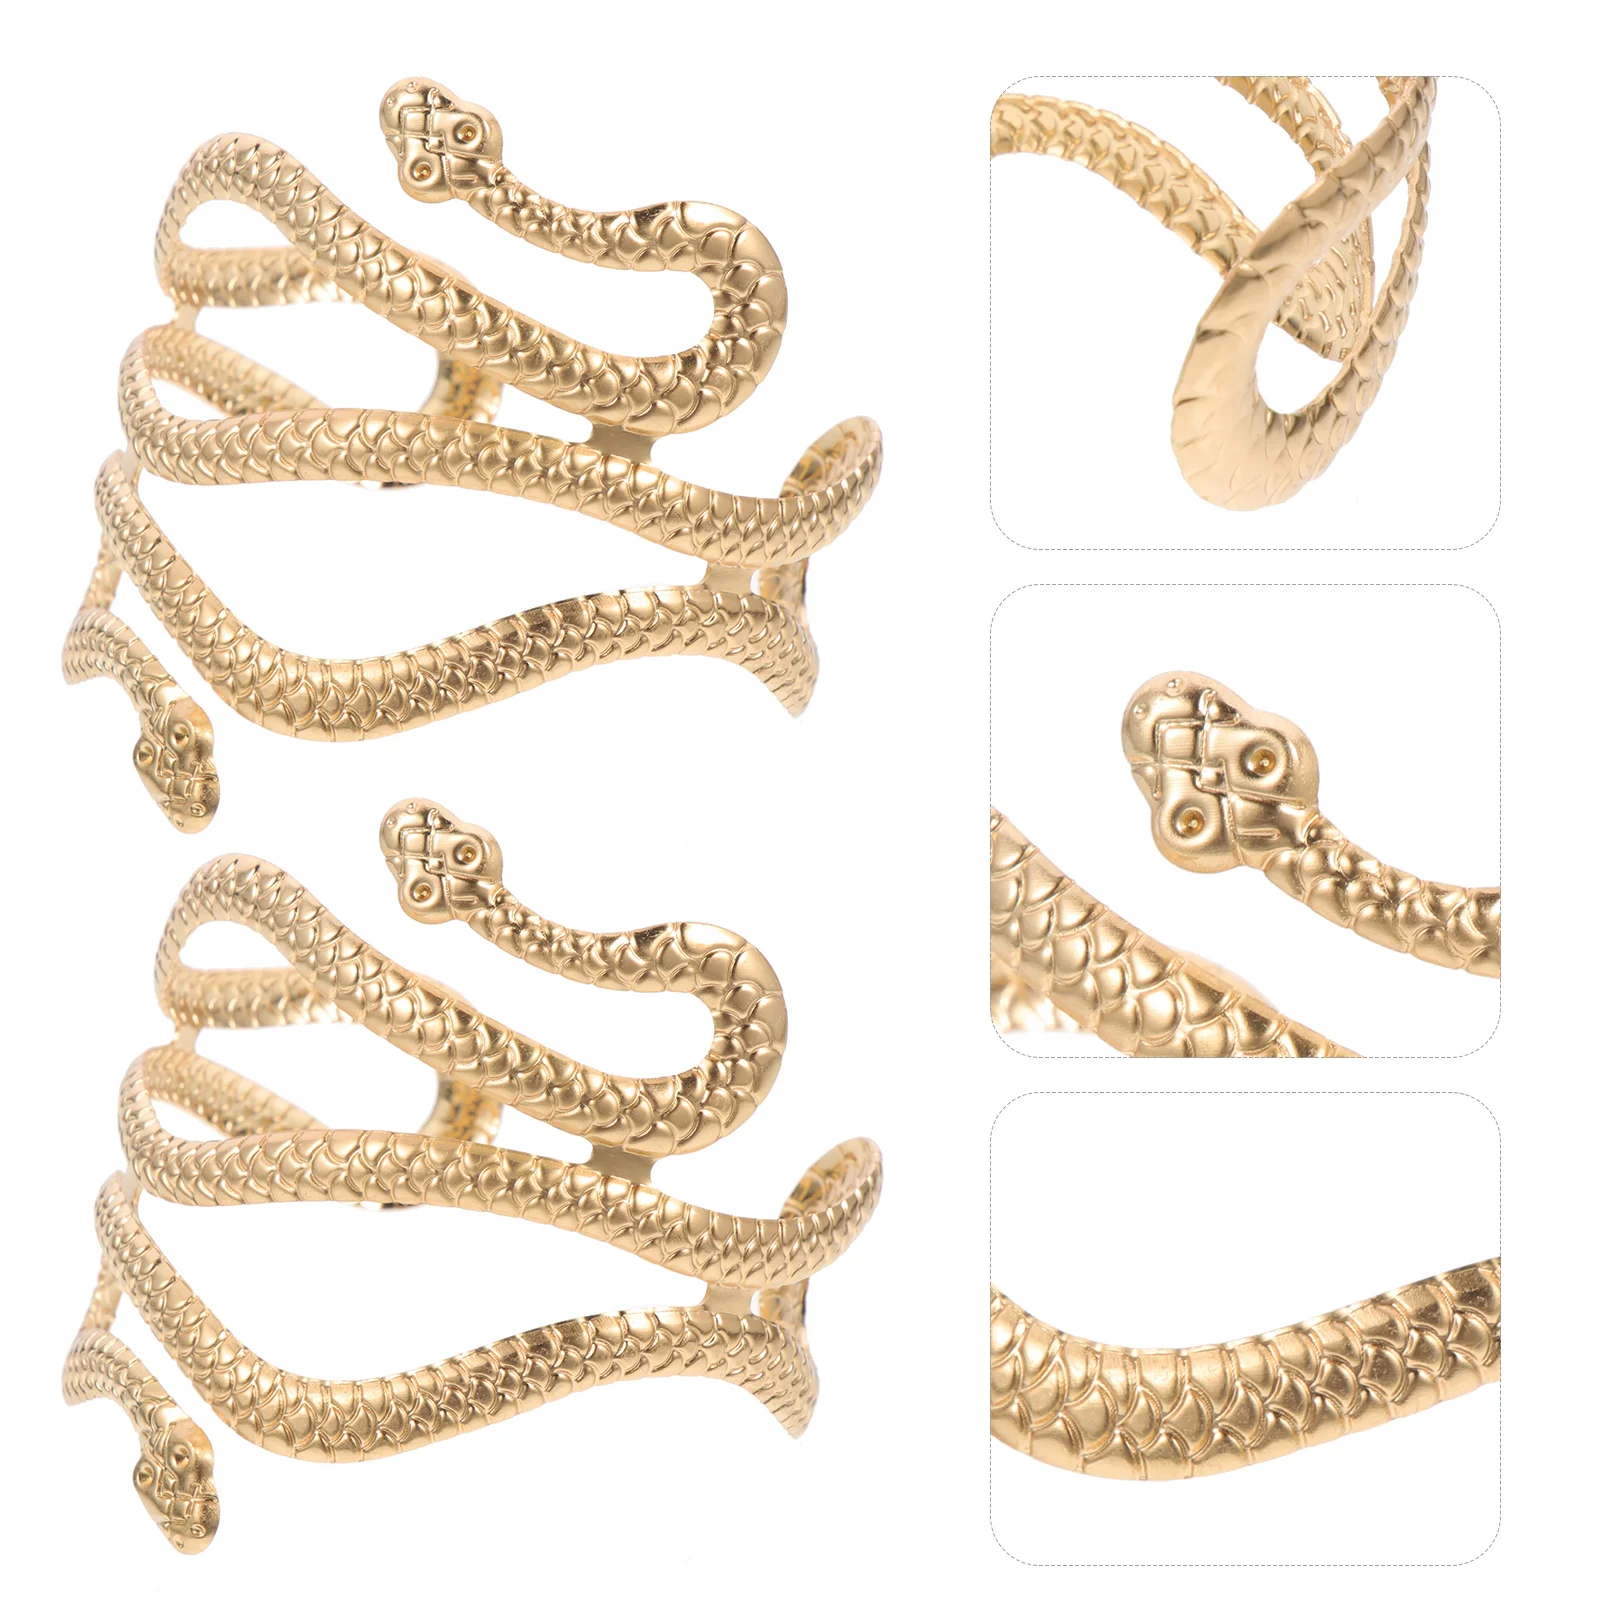 

2 Pcs Snake Armband Bracelets Cuff Bangle Adjustable Upper Alloy Jewelry Open Armlet